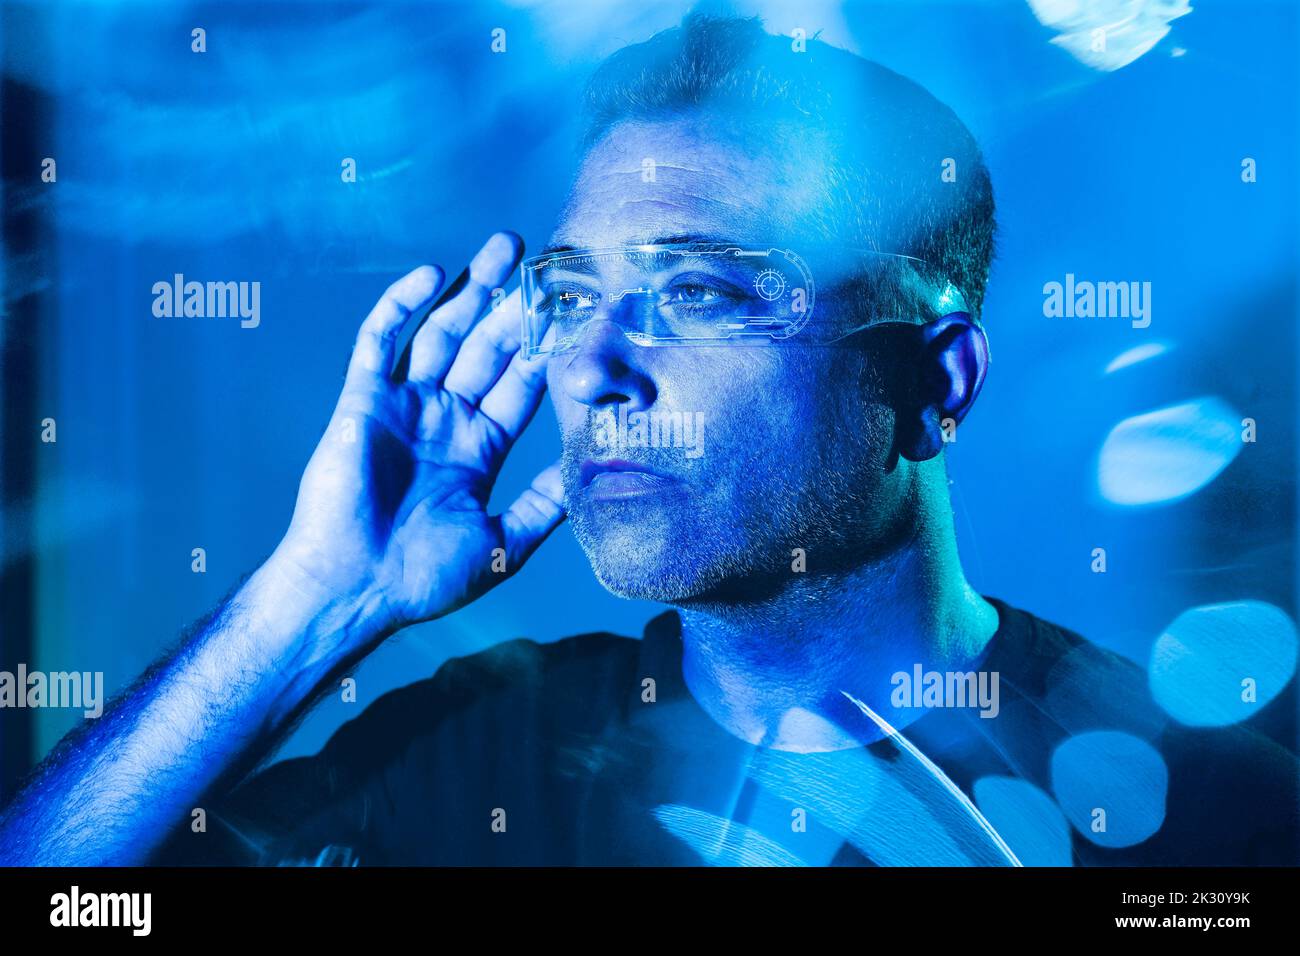 Man adjusting futuristic glasses illuminated with blue light Stock Photo